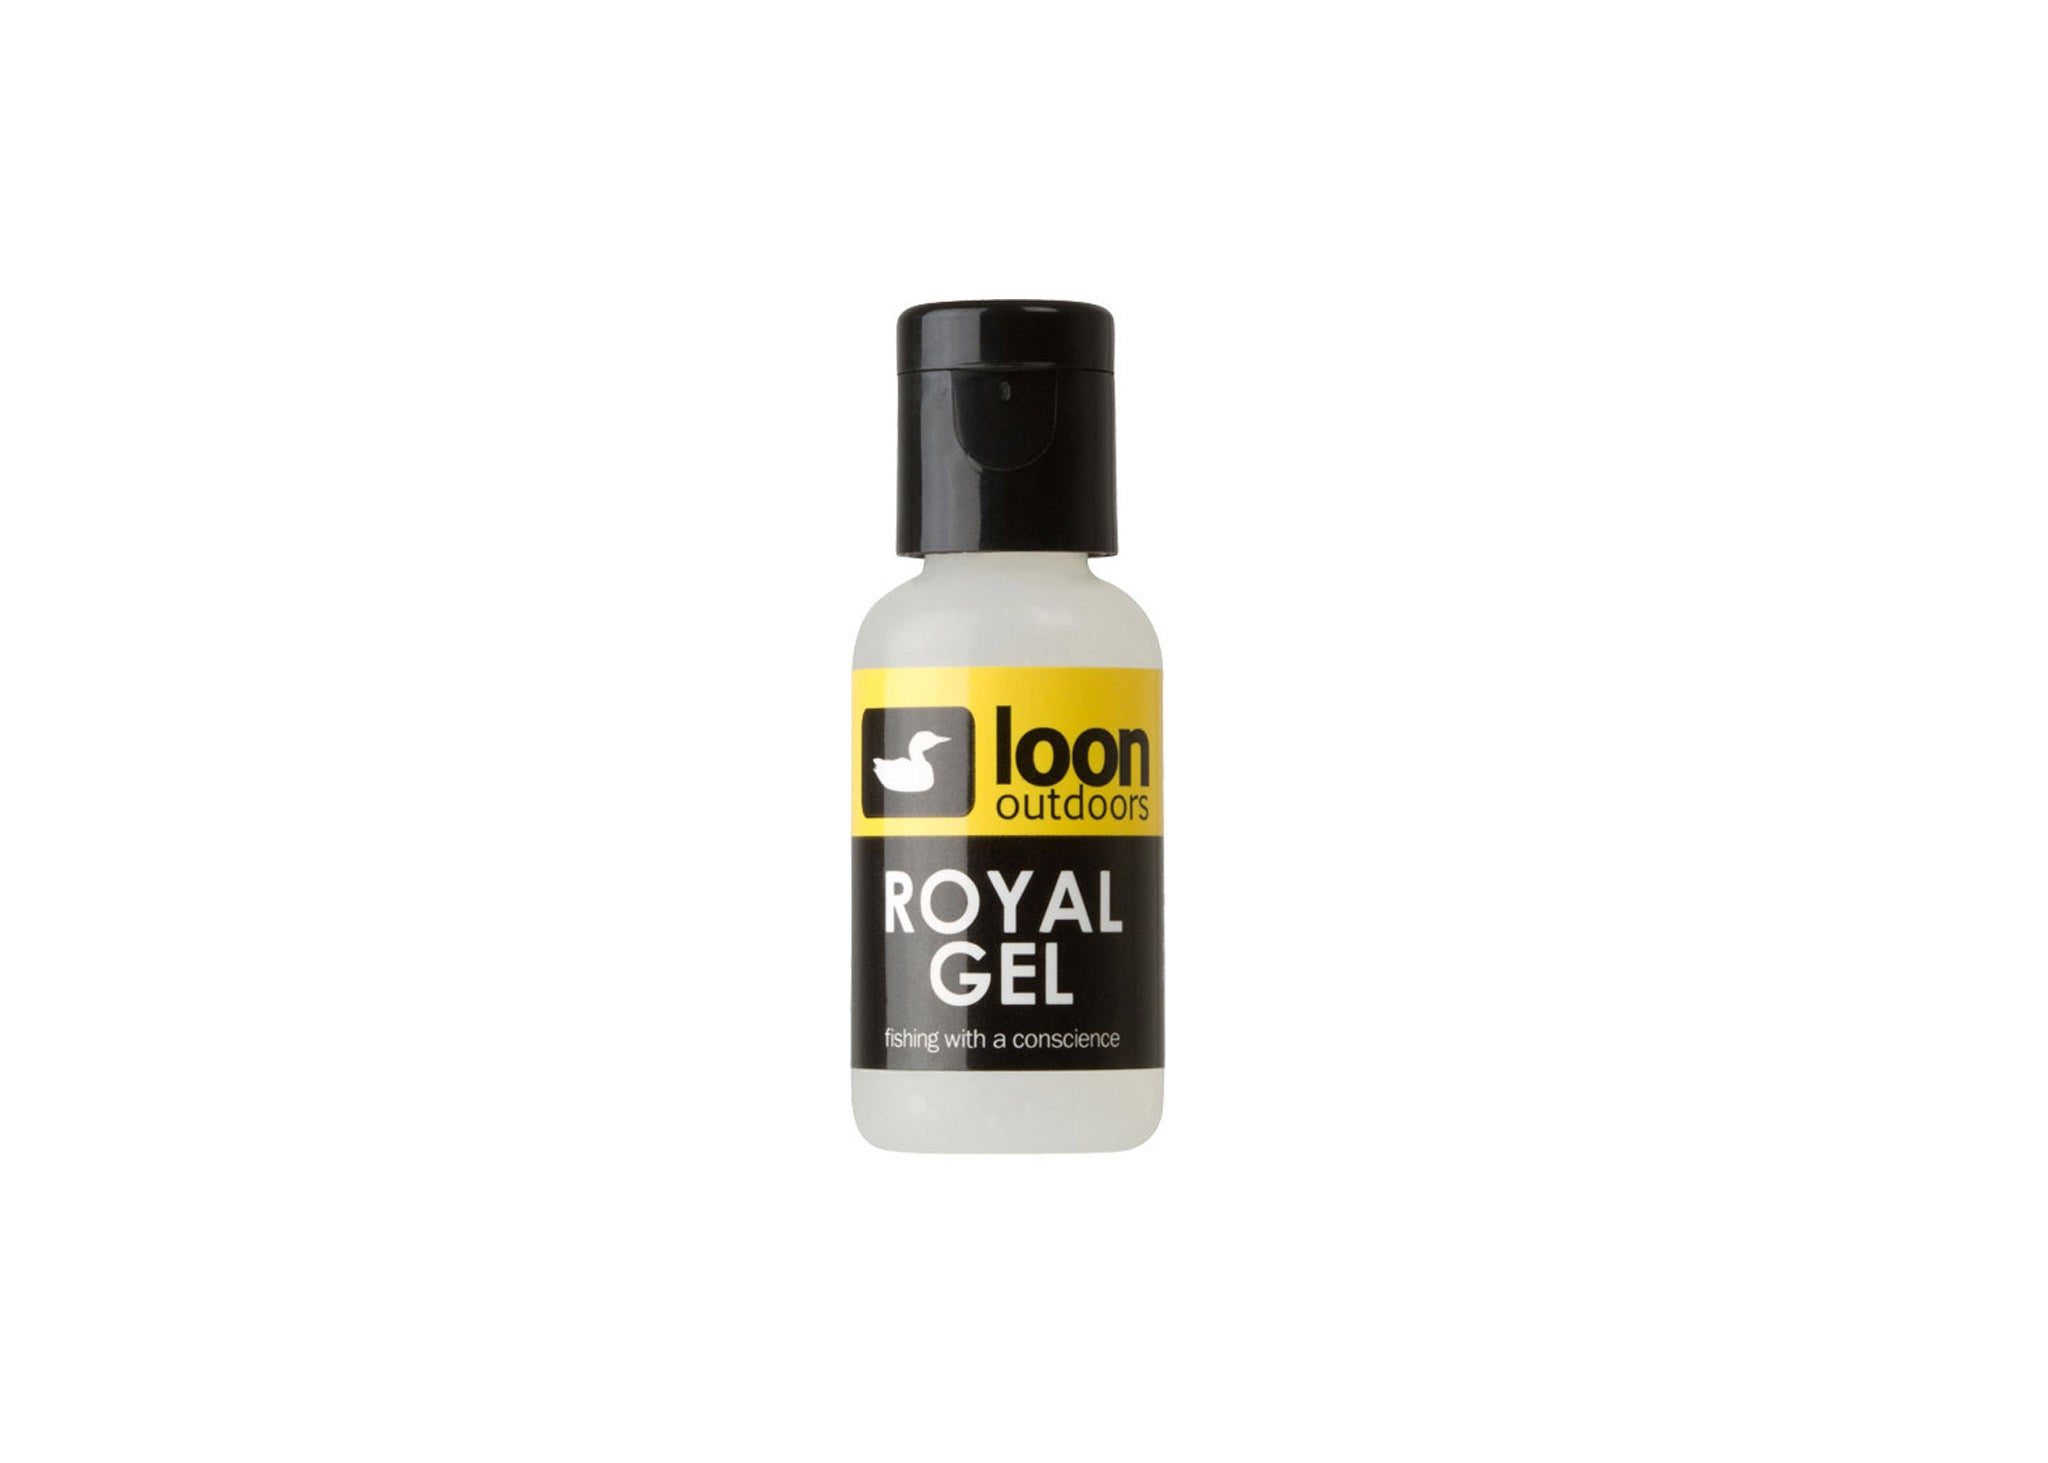 Loon Royal Gel Floatant, Gear